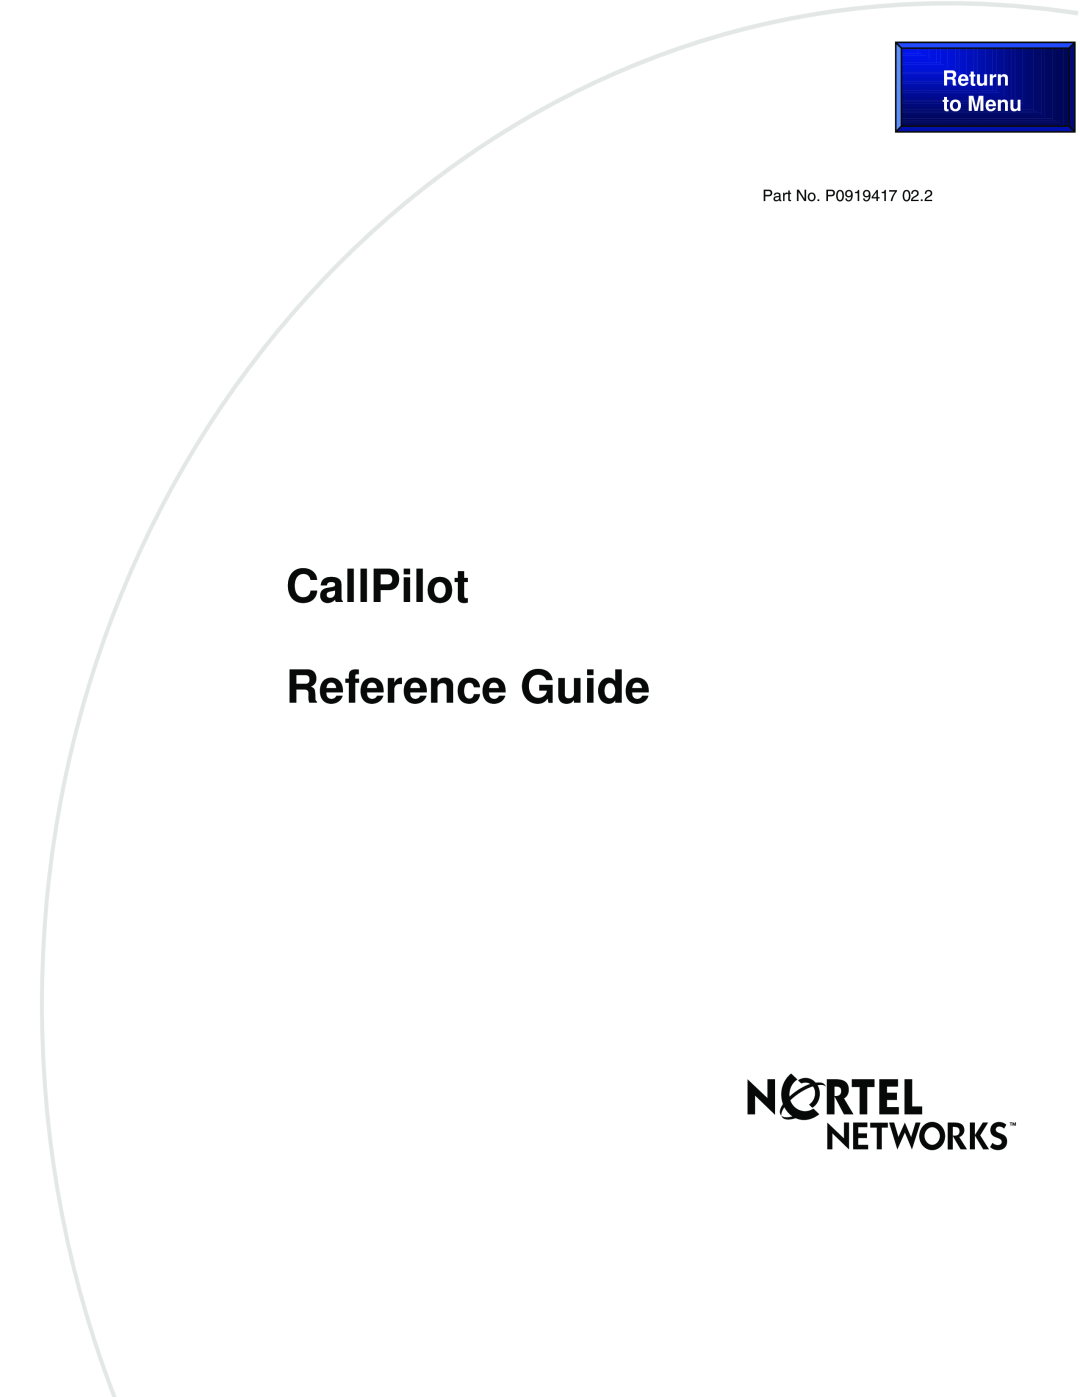 Nortel Networks manual CallPilot Reference Guide, Return, to Menu 